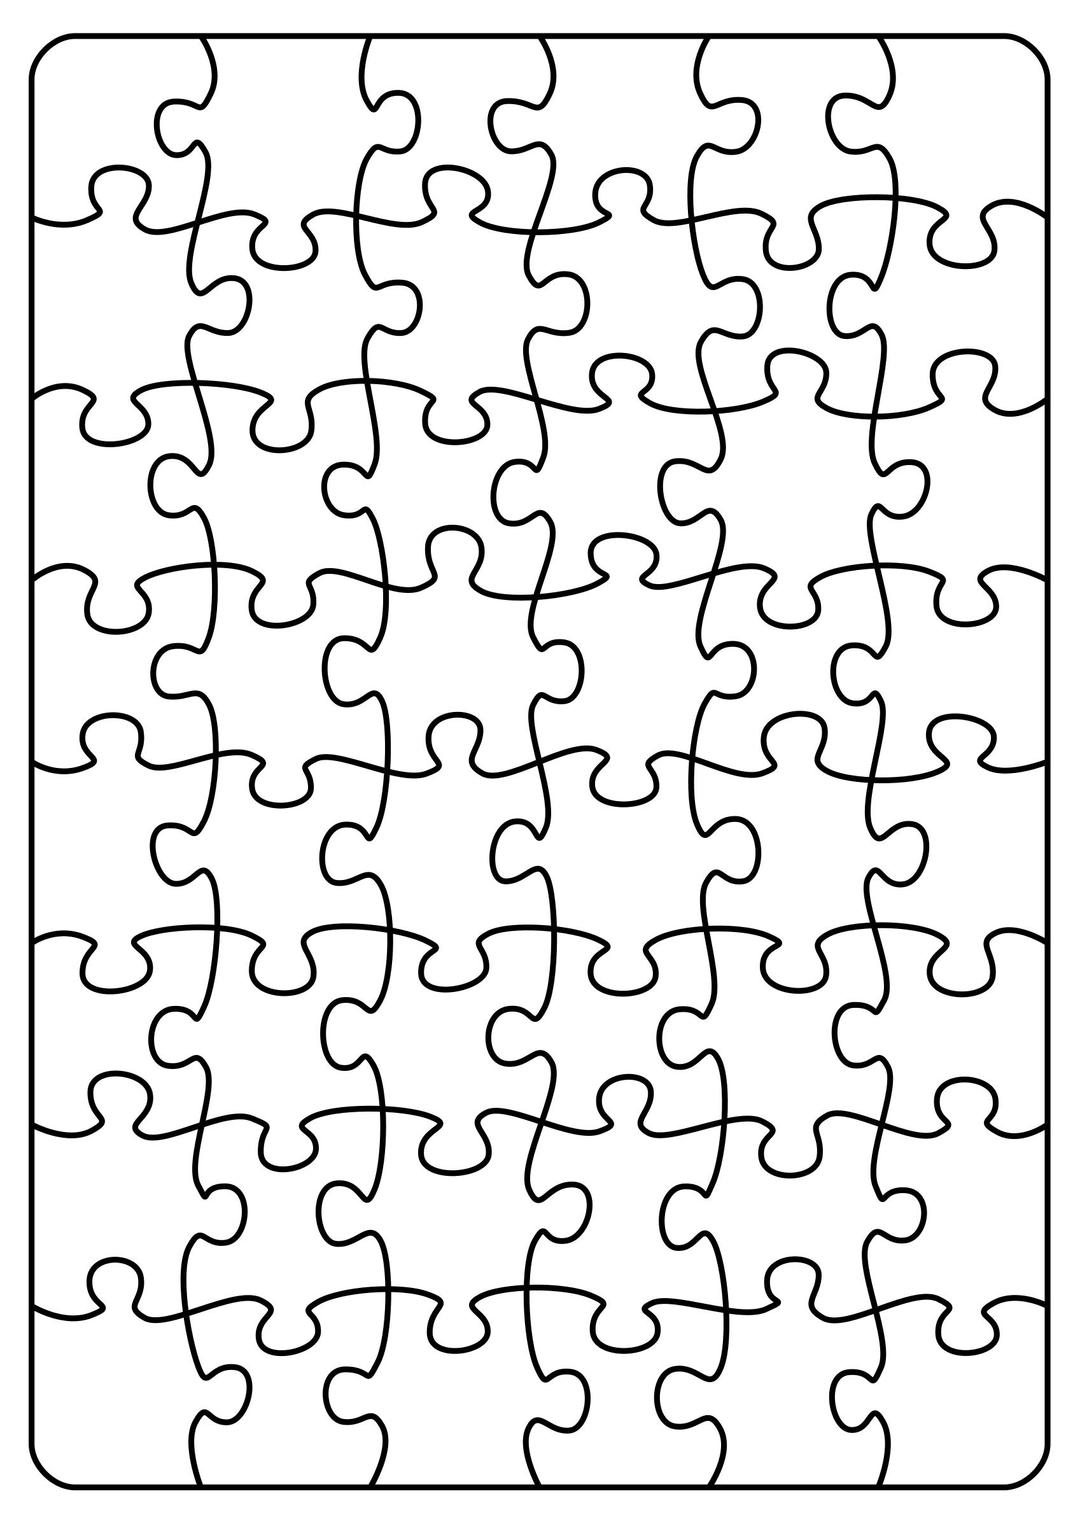 Jigsaw Puzzle A4 6 x 8  png transparent